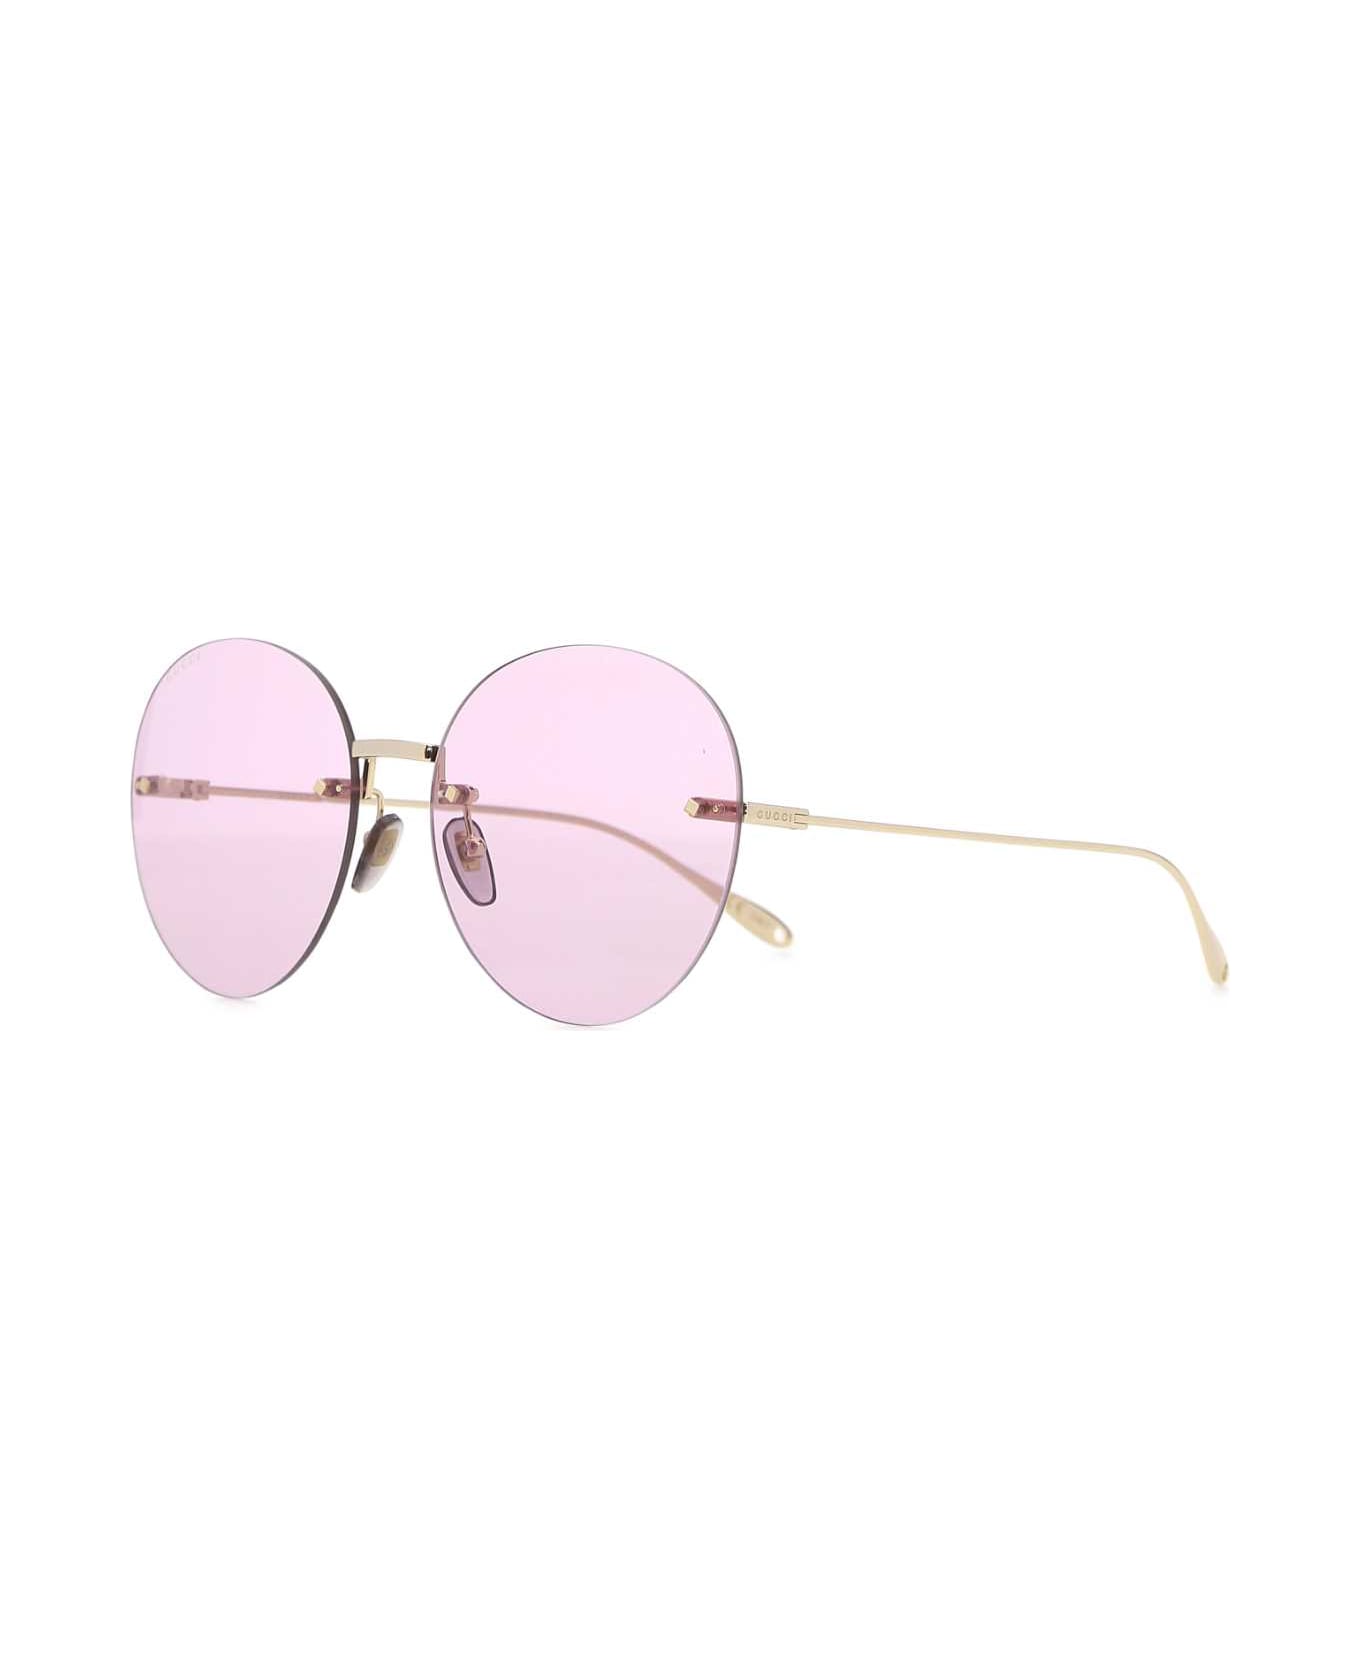 Gucci Gold Metal Sunglasses - 8052